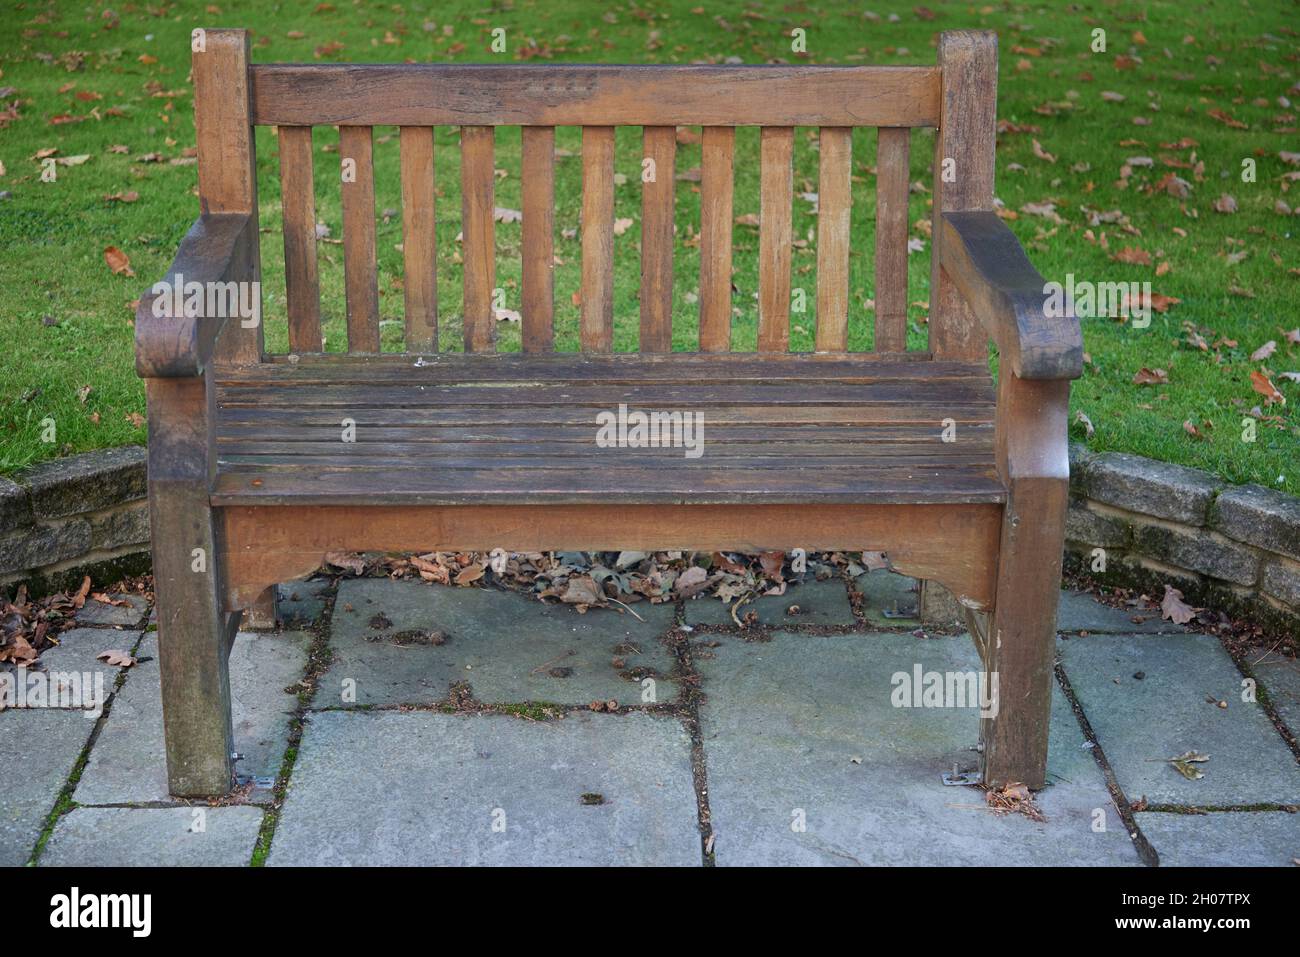 Exterior view of a wooden garden bench in October. Stock Photo